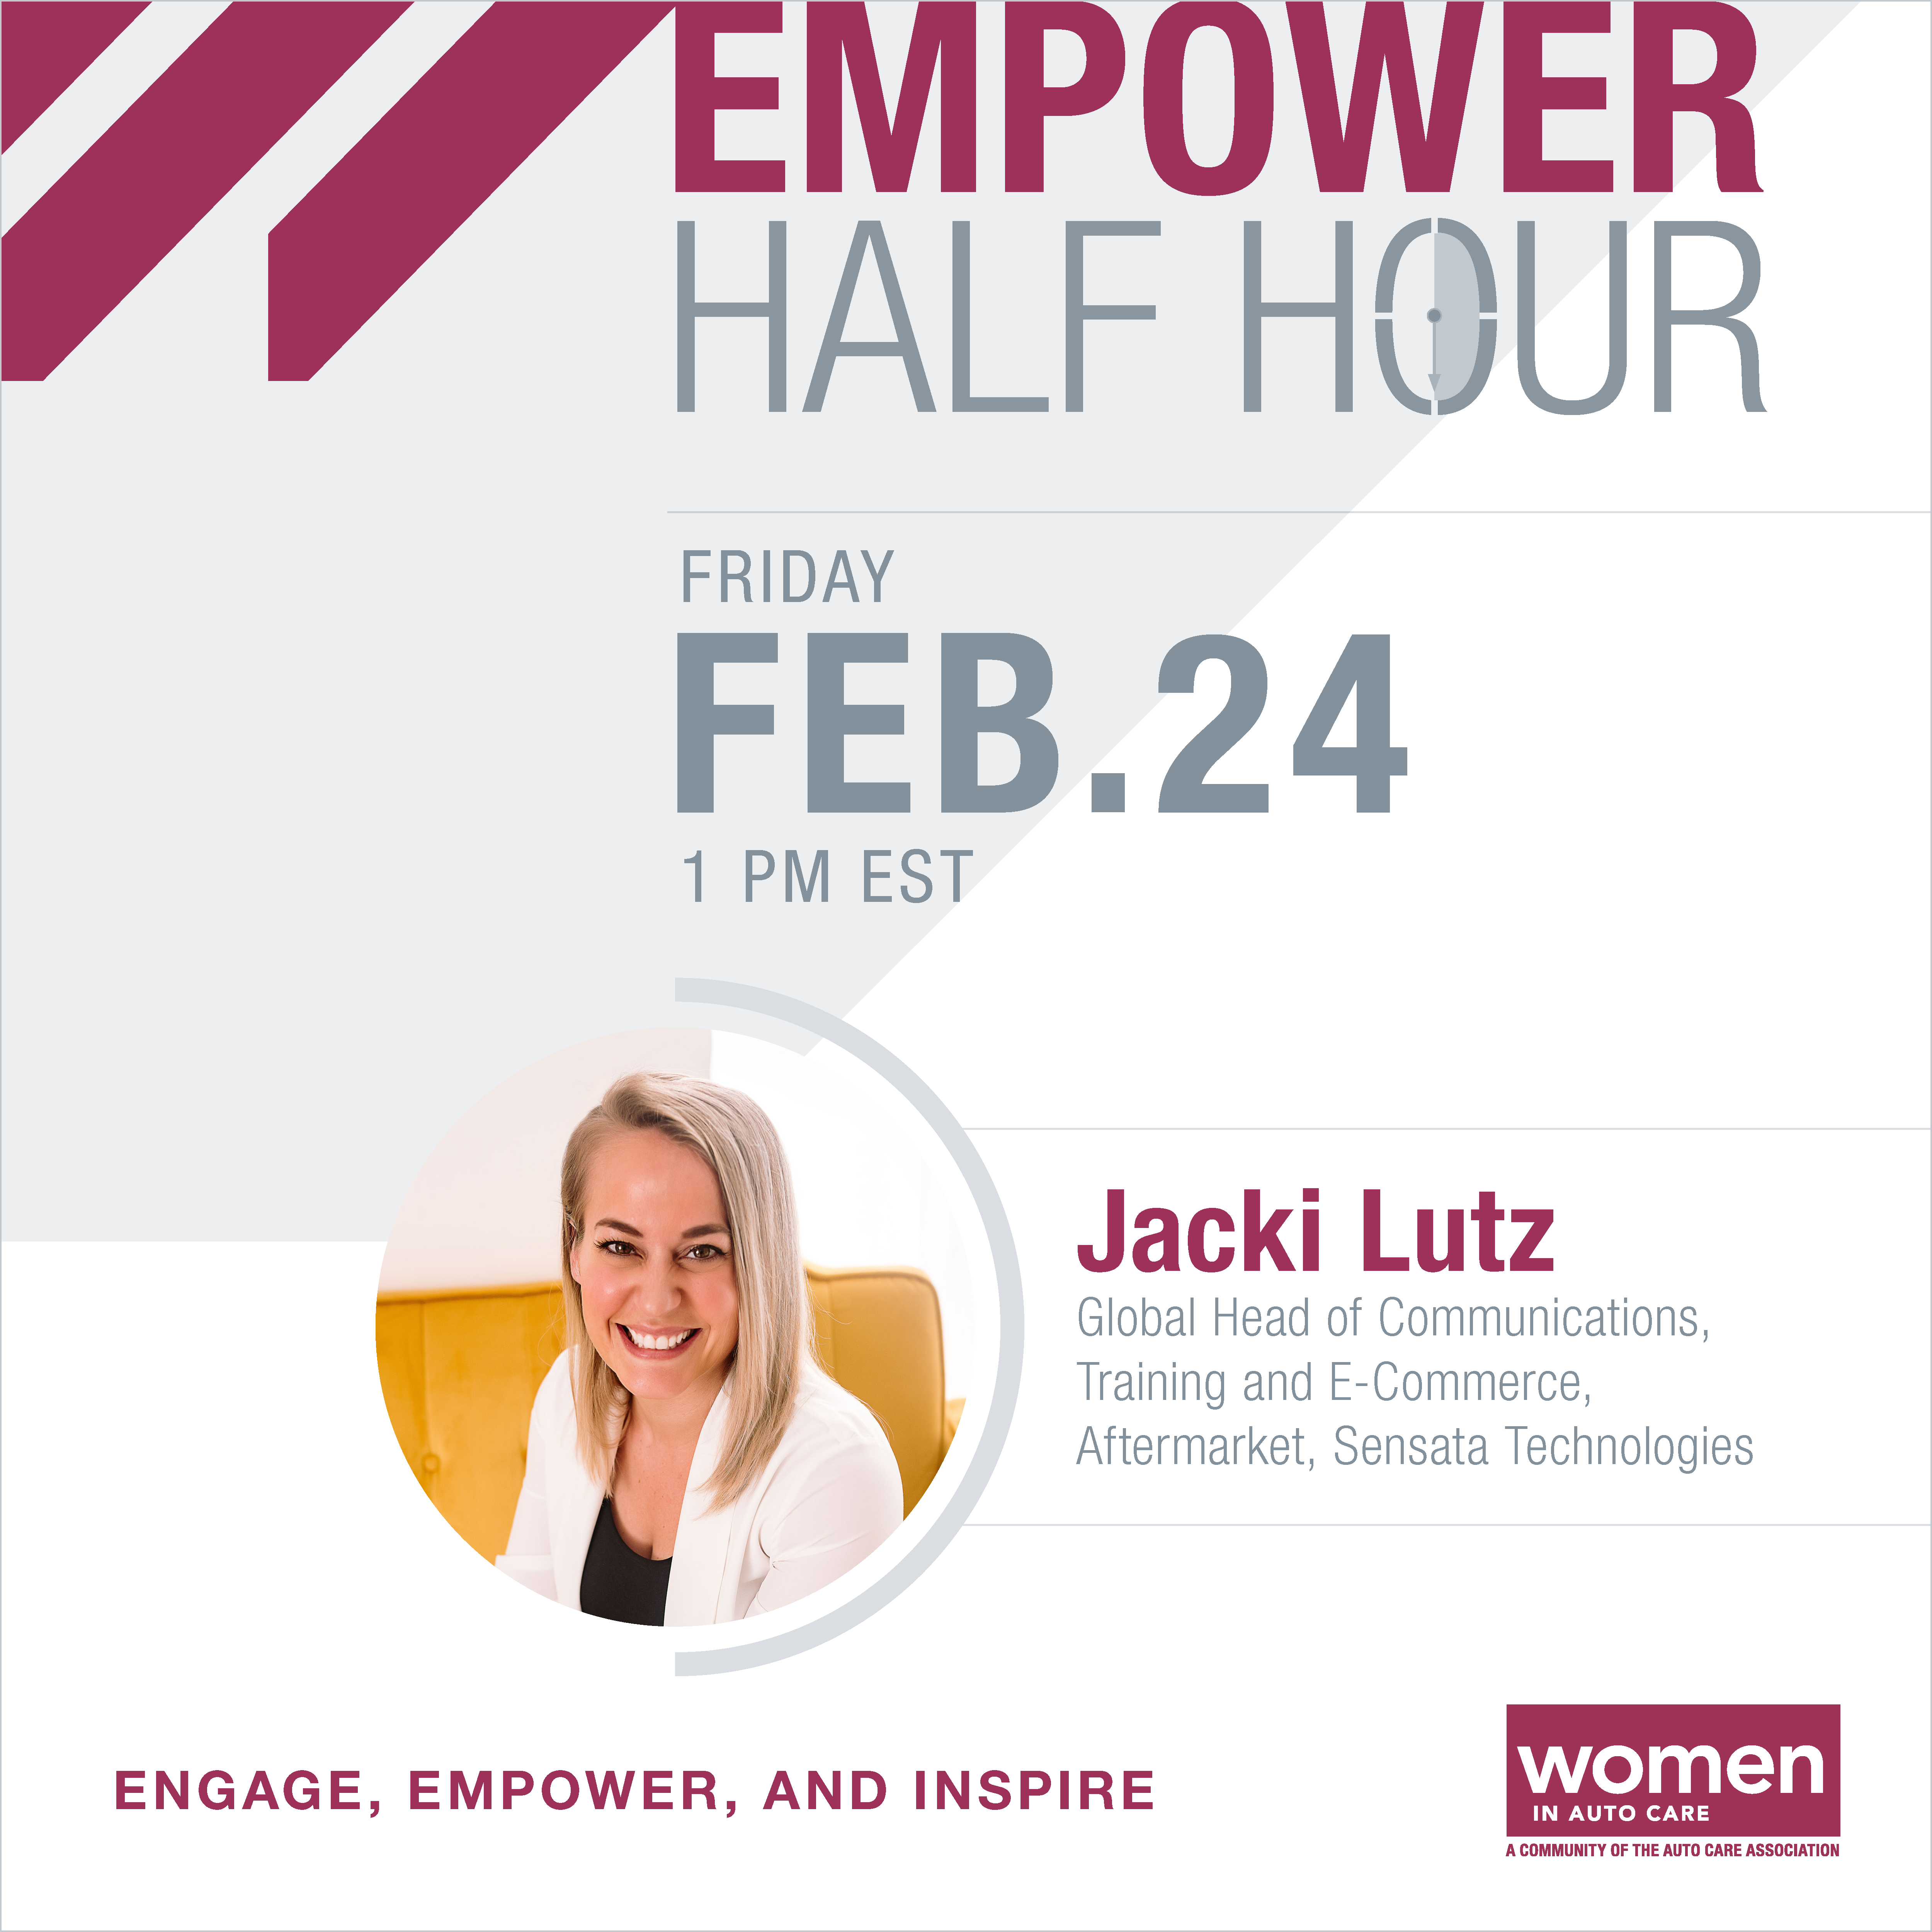 Image highlighting Women in Auto Care Empower Half Hour Jacki Lutz